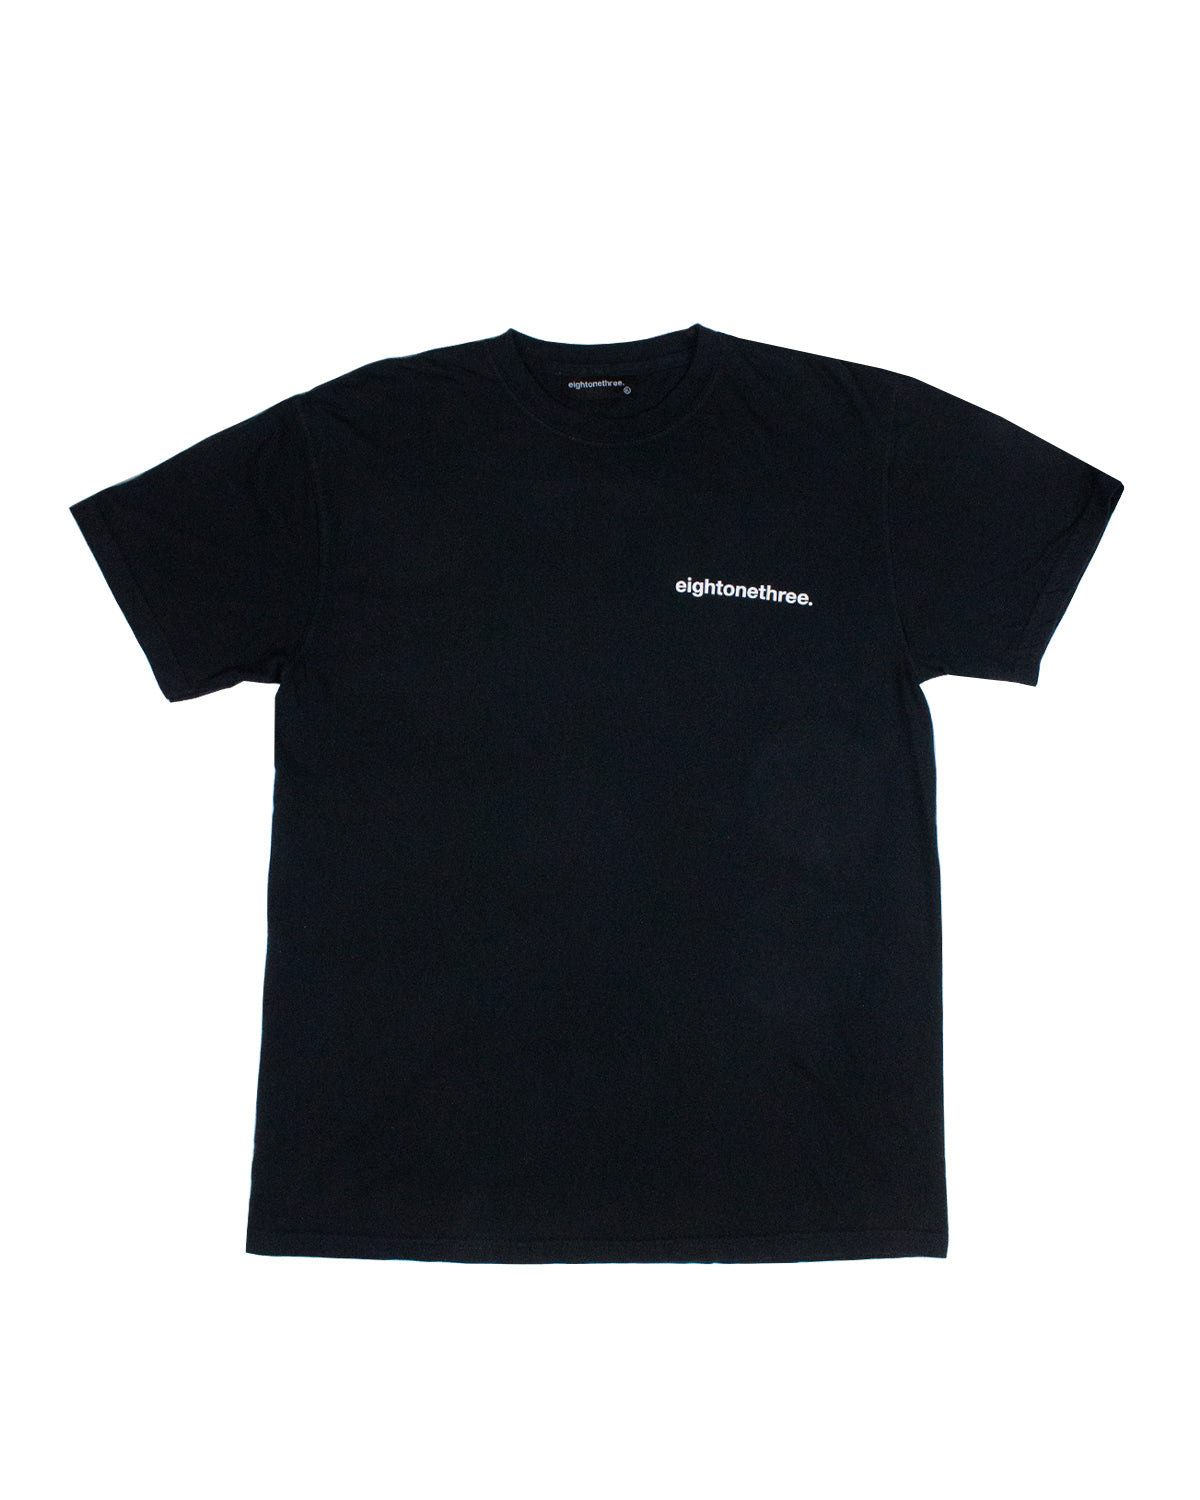 eightonethree shop t-shirt black 